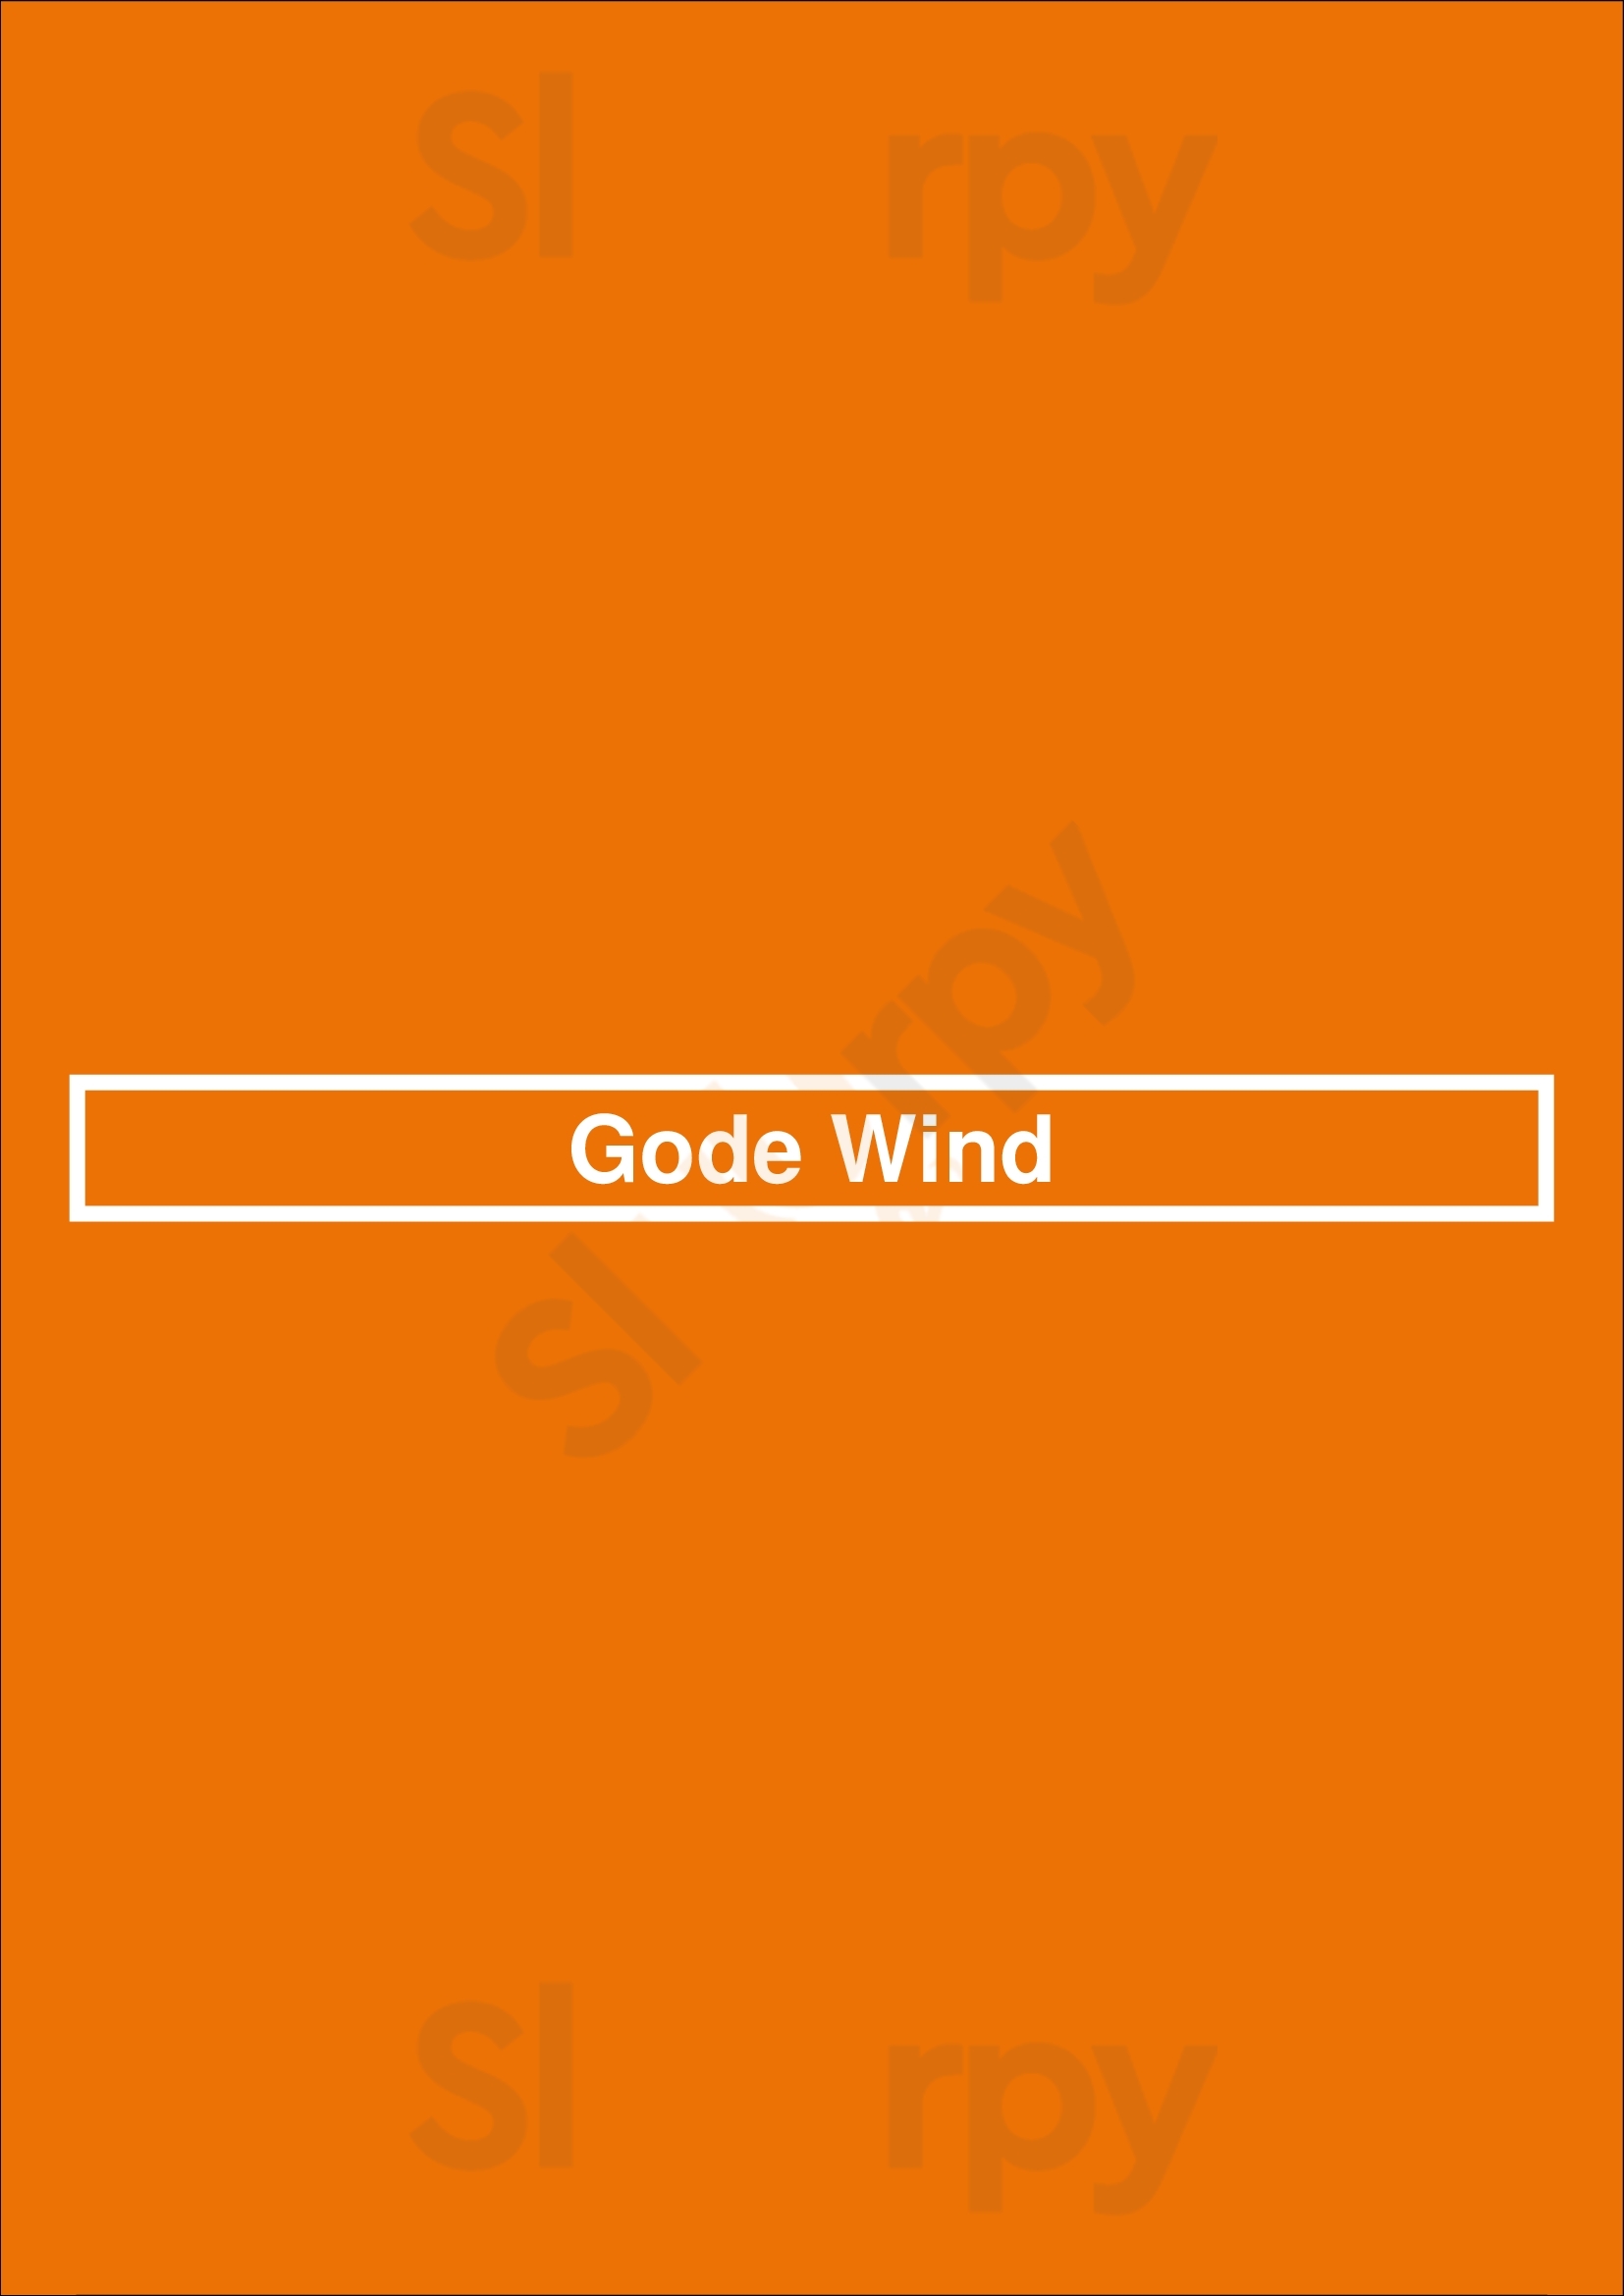 Gode Wind Berlin Menu - 1